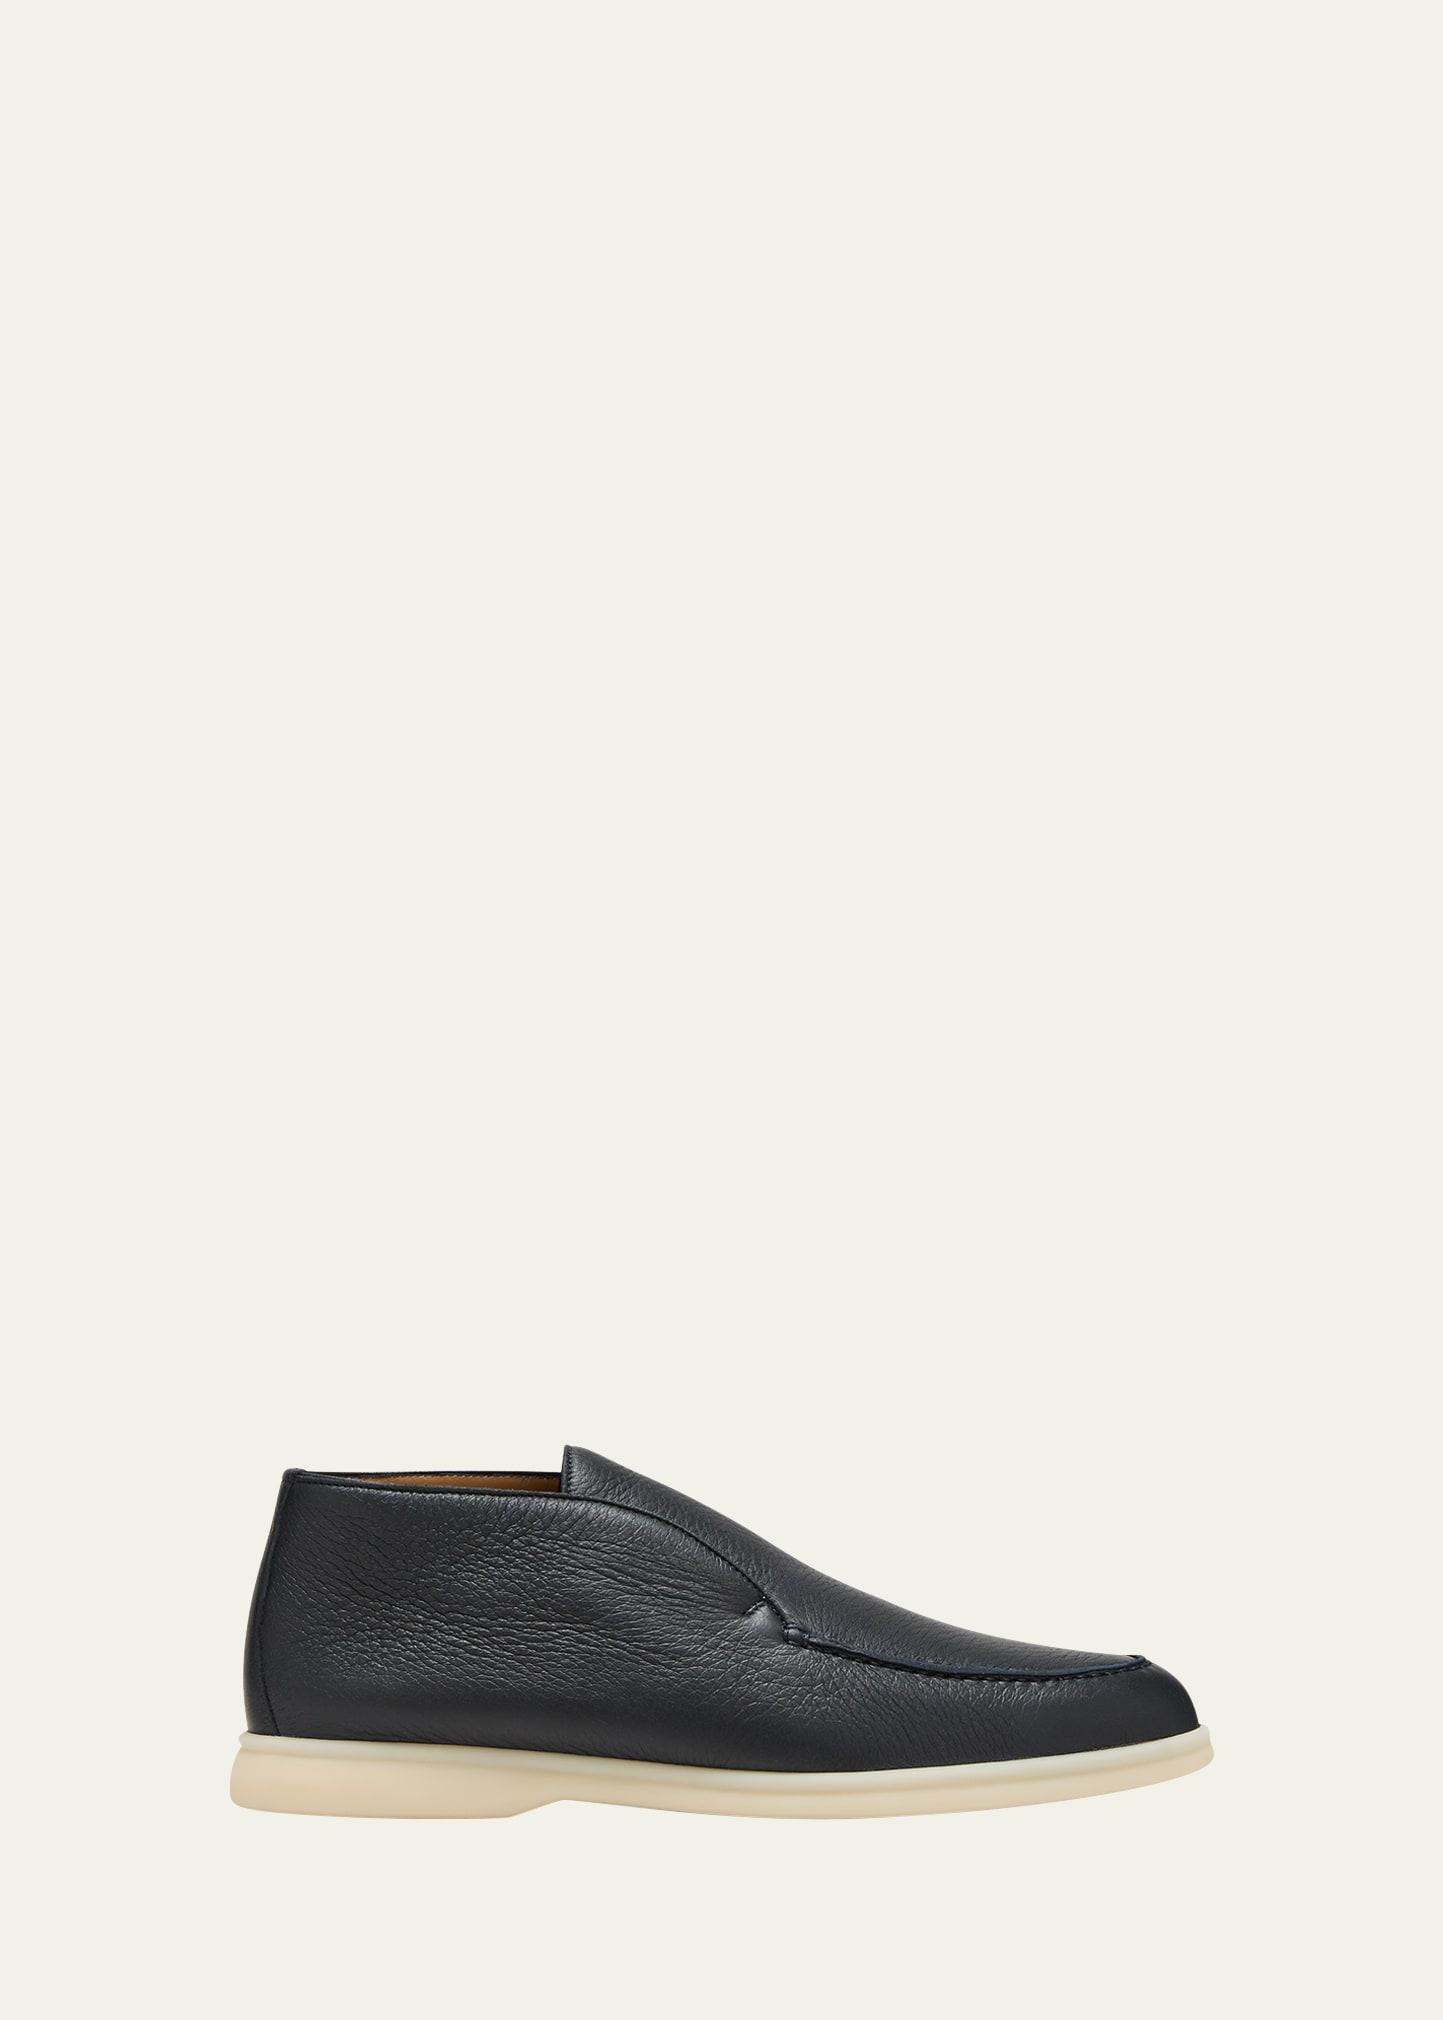 Loro Piana Leather Chukka Boot Product Image